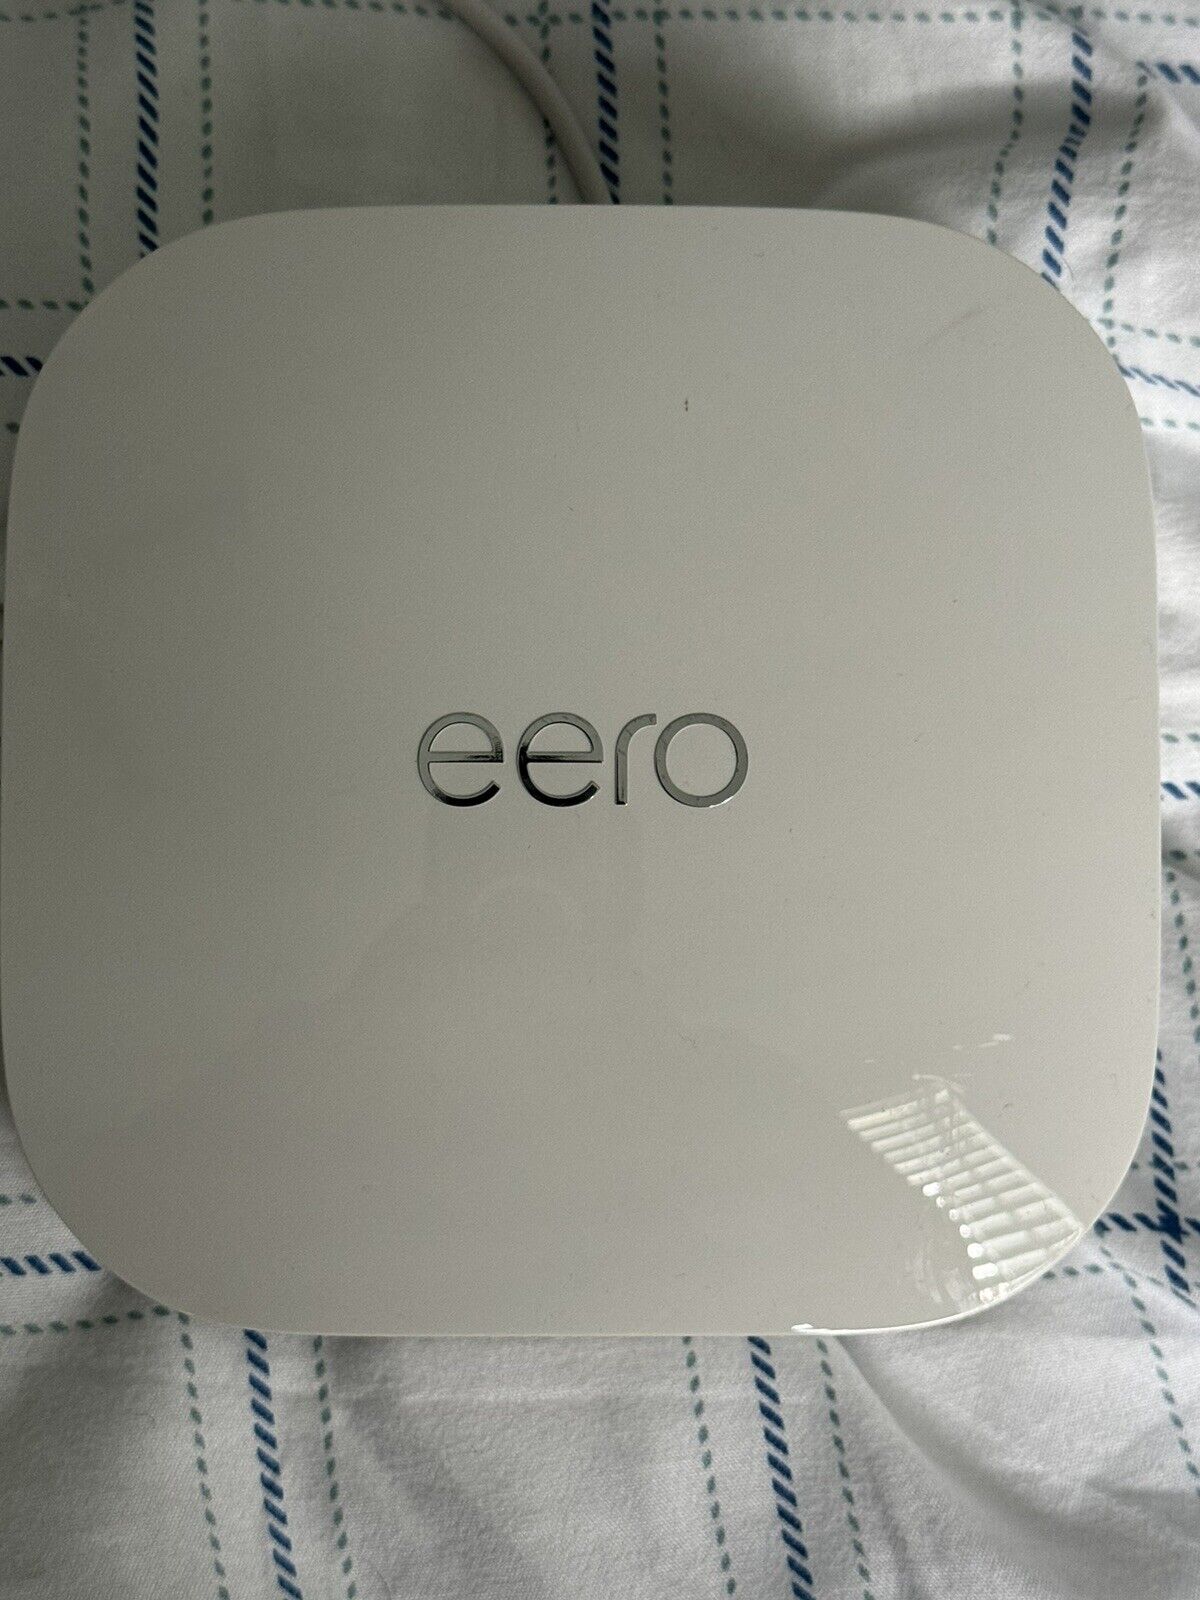 eero Pro 6E Tri-Band Mesh Wi-Fi Router - White (S011111)